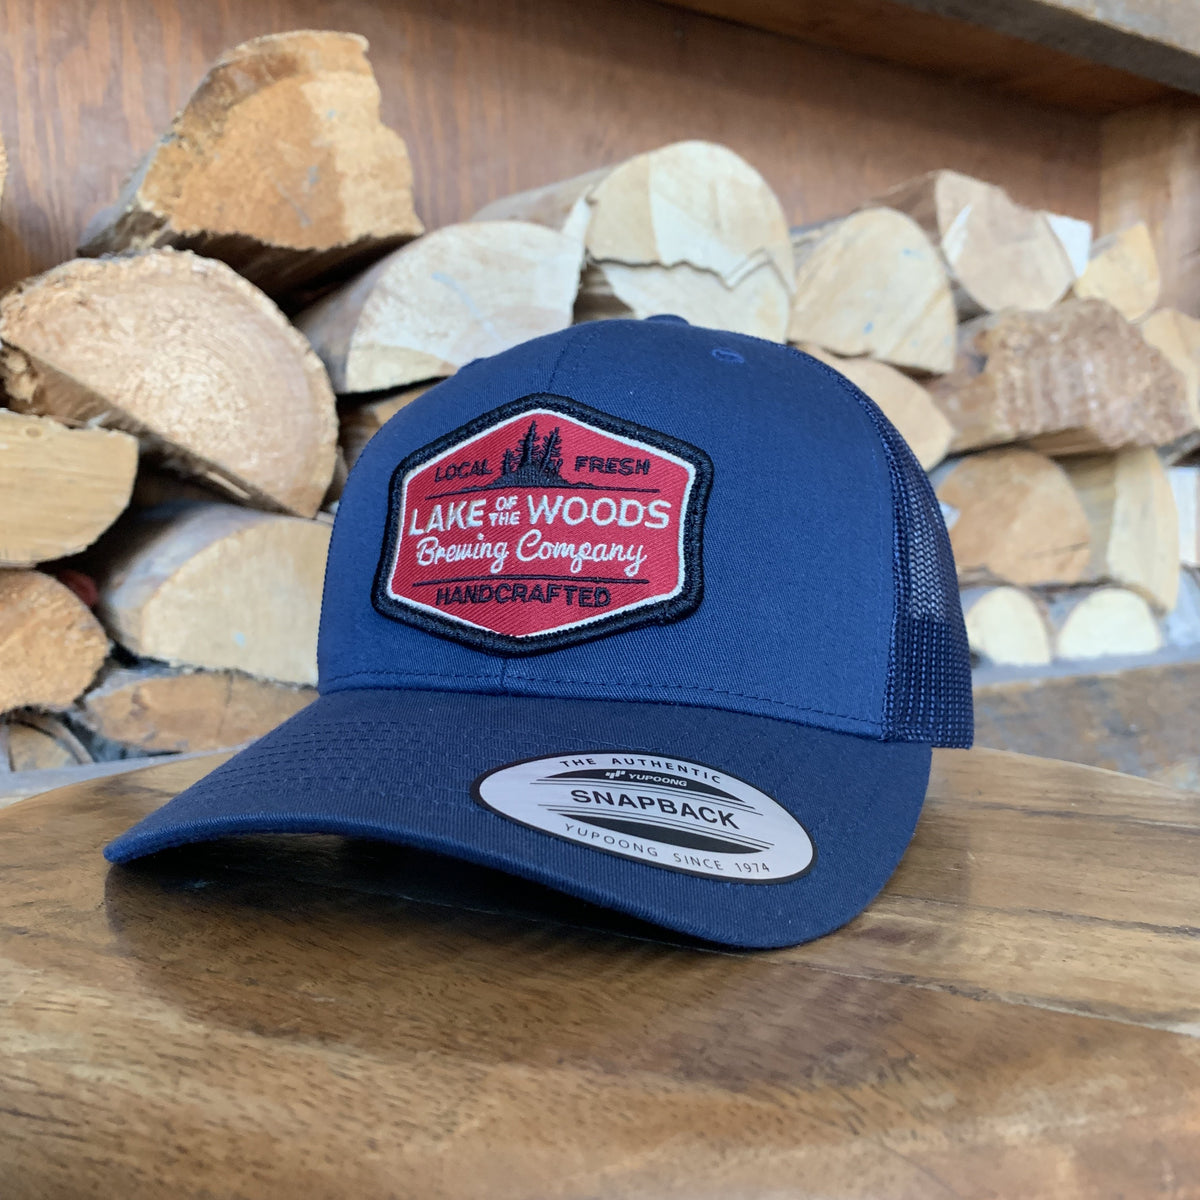 Blue Star Snapback Hat – Shop Beer Gear